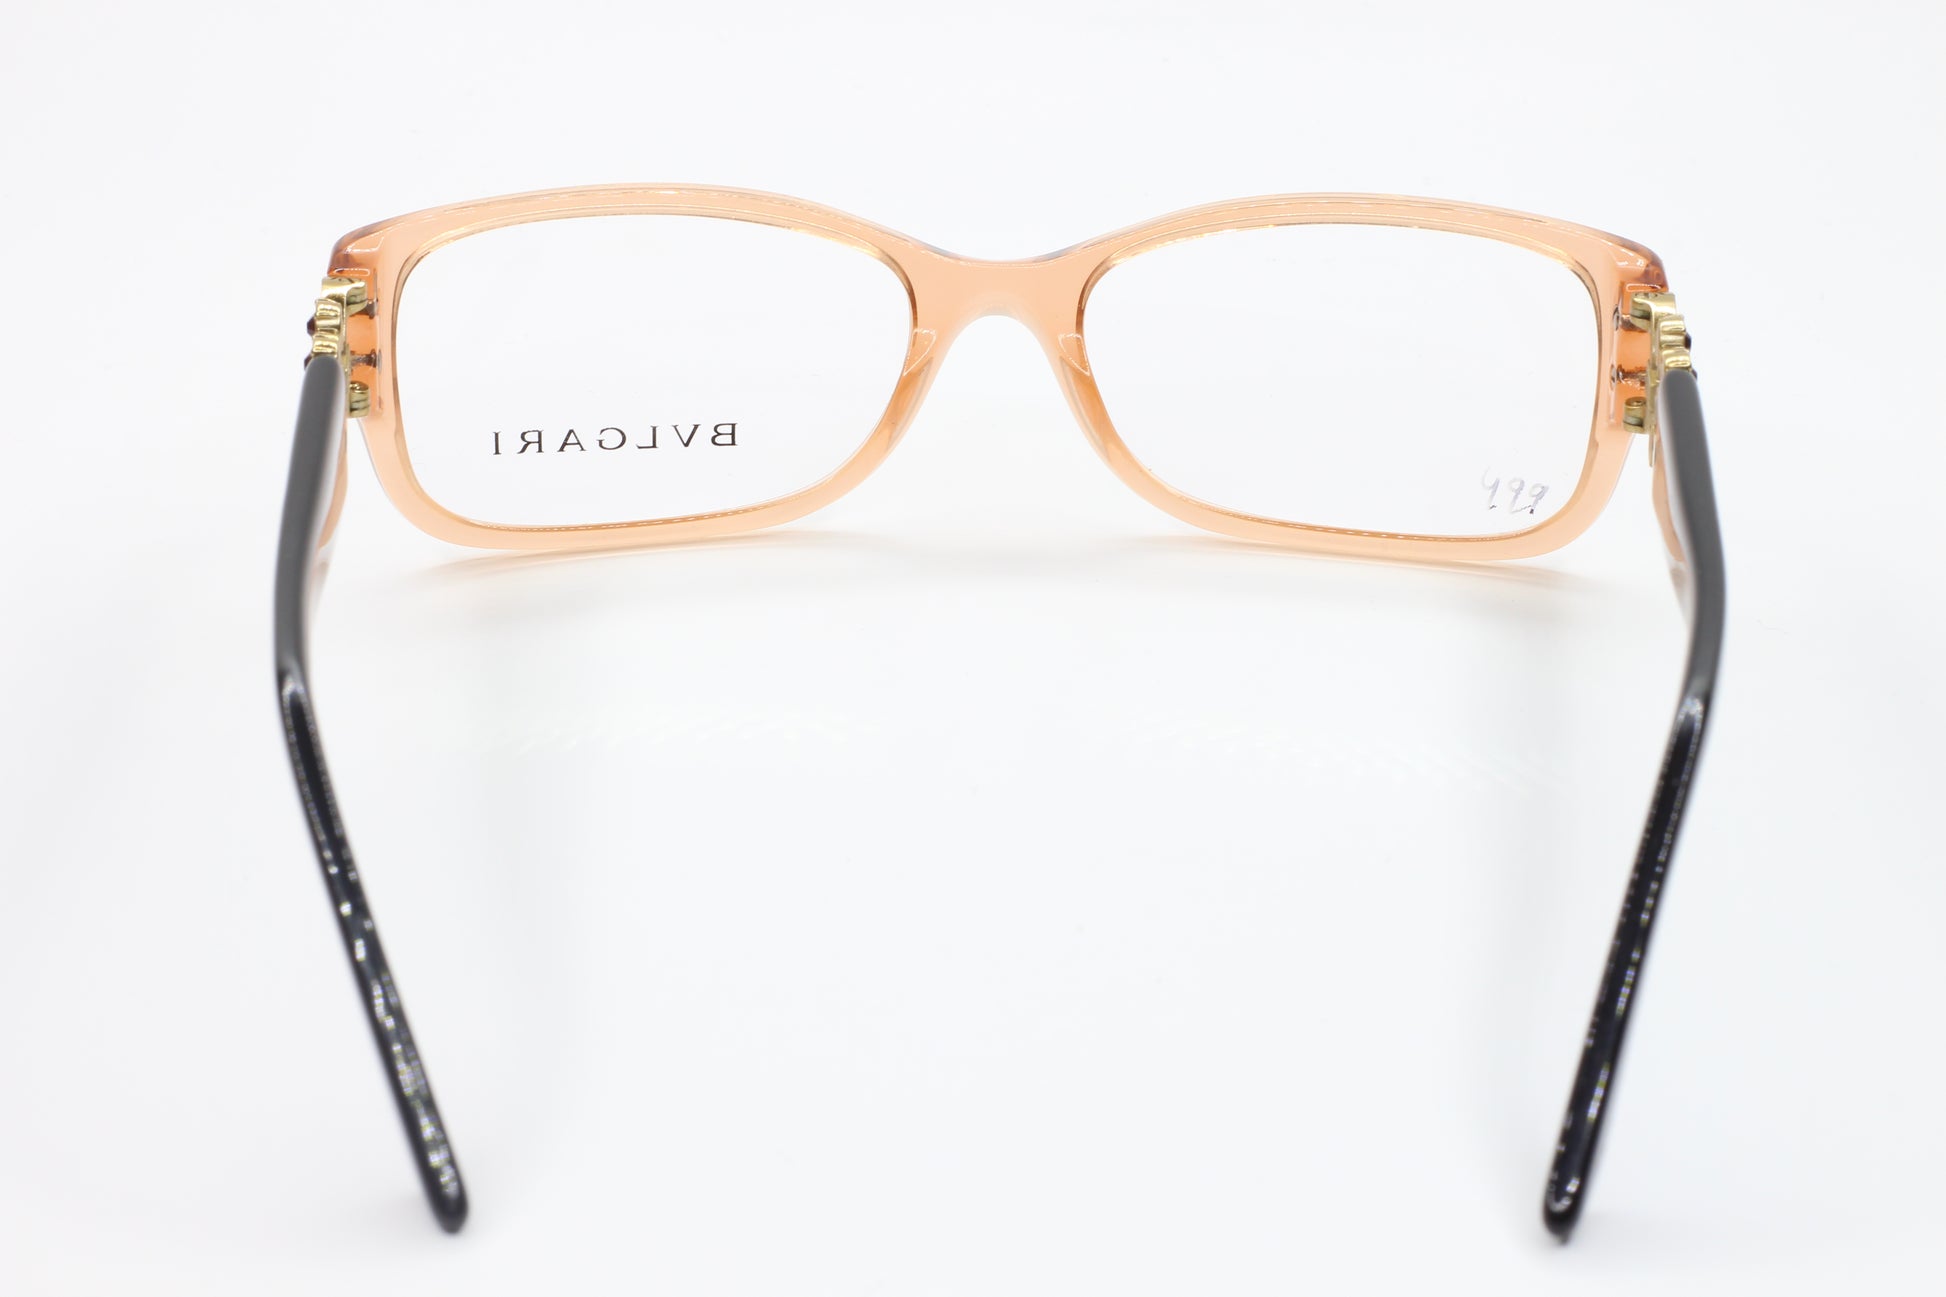 BVLGARI BV4067B 5060 Brown Swarovski Crystal Luxury Eyeglasses - Eyeglasses, Woman, Women